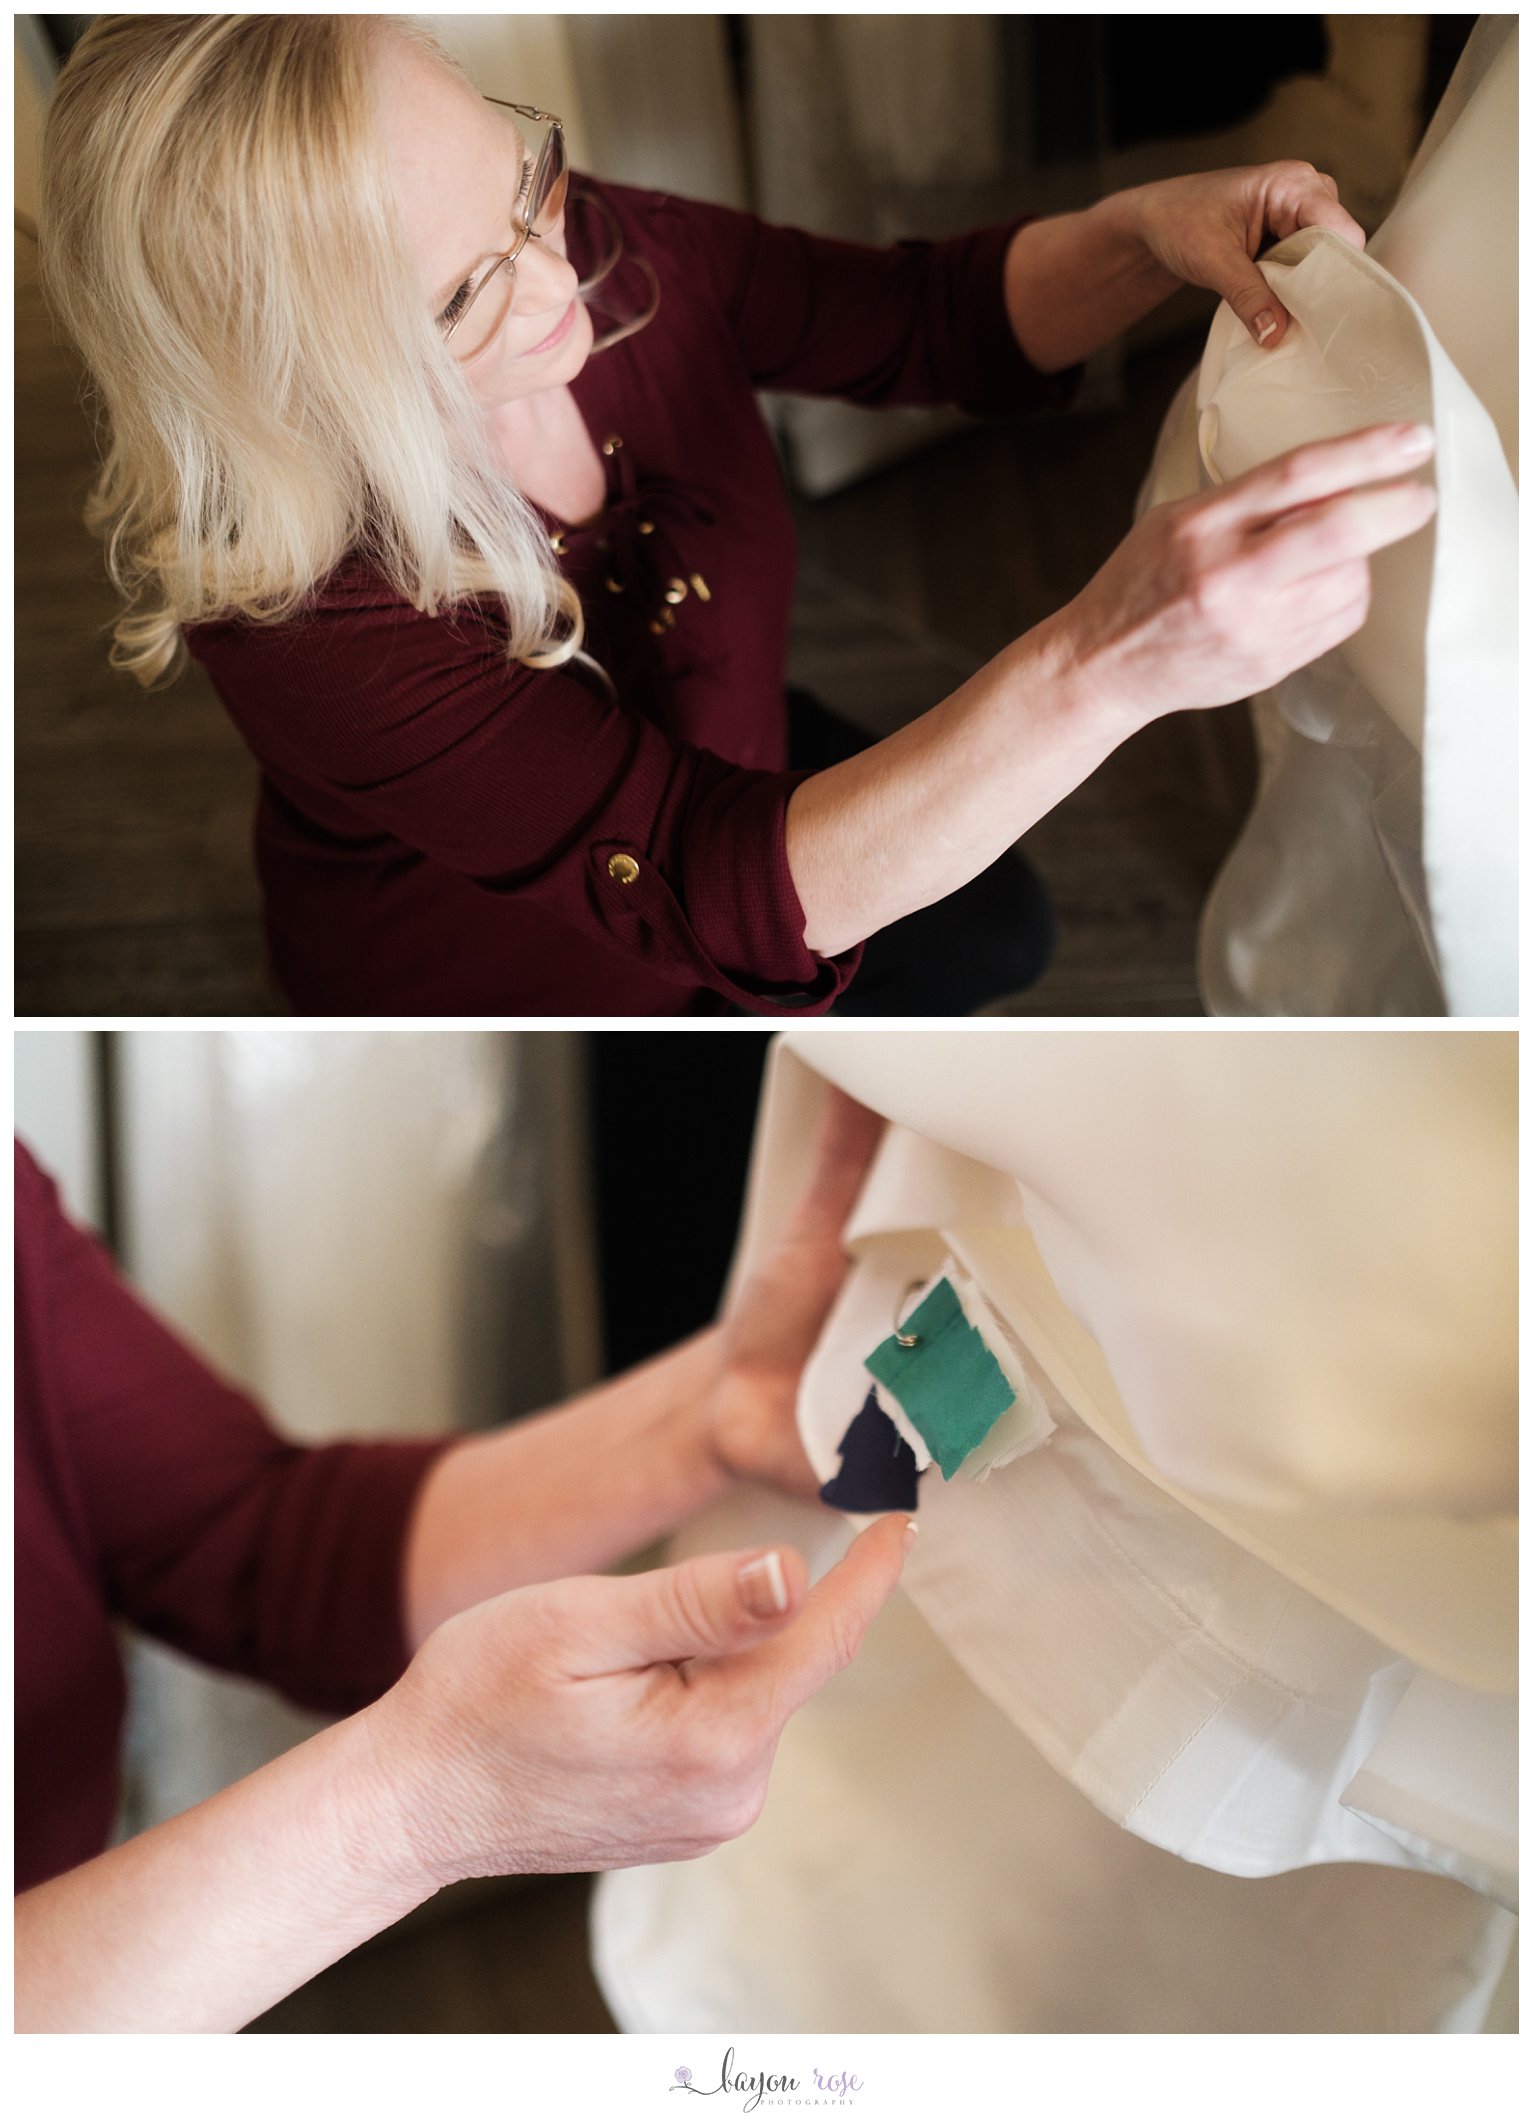 Mom pinning sentimental scraps of fabric to bride's wedding dress